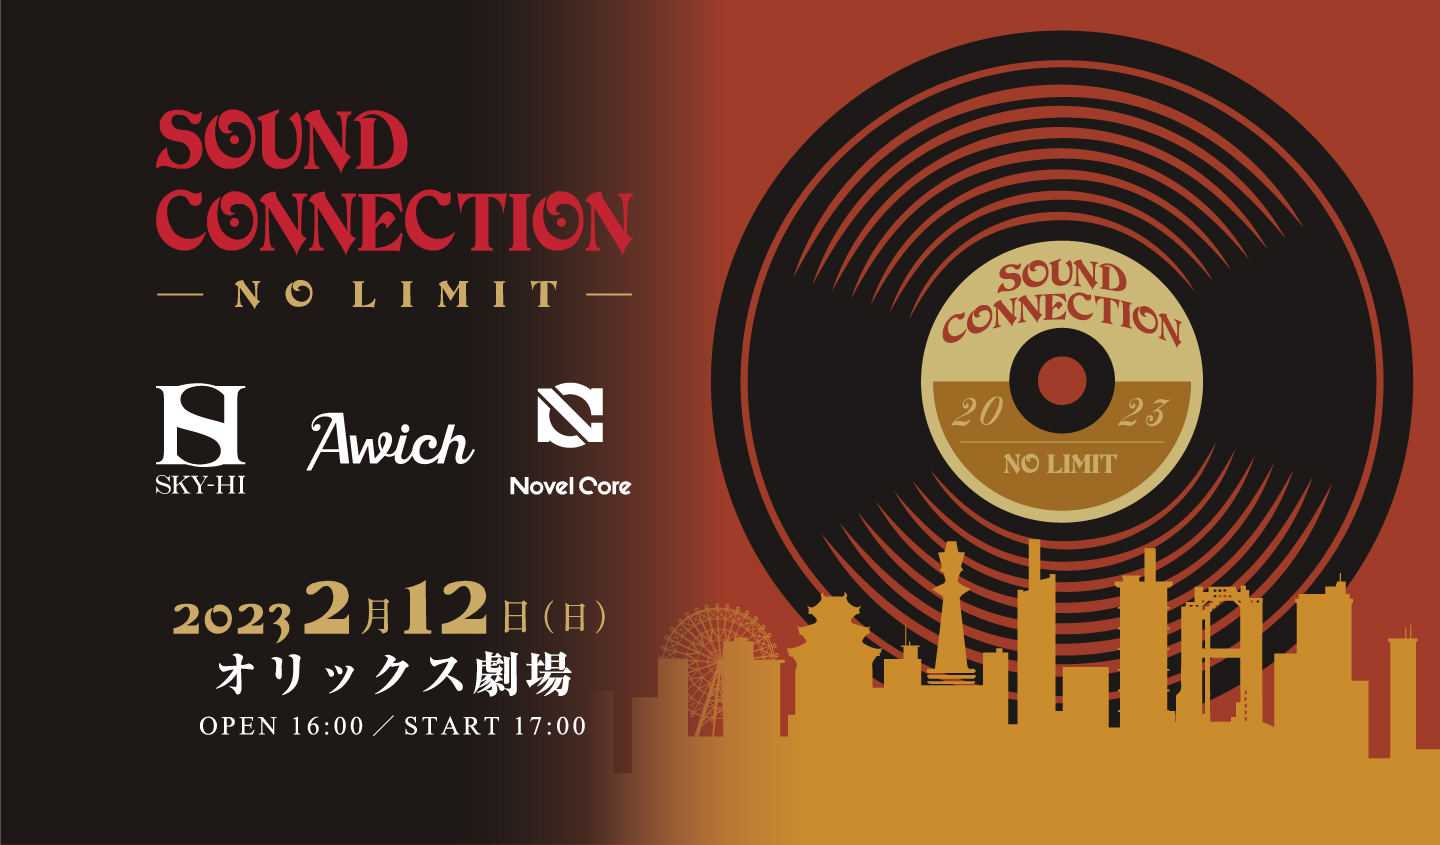 SKY-HI、Awich、Novel Coreの3組が集結「SOUND CONNECTION 